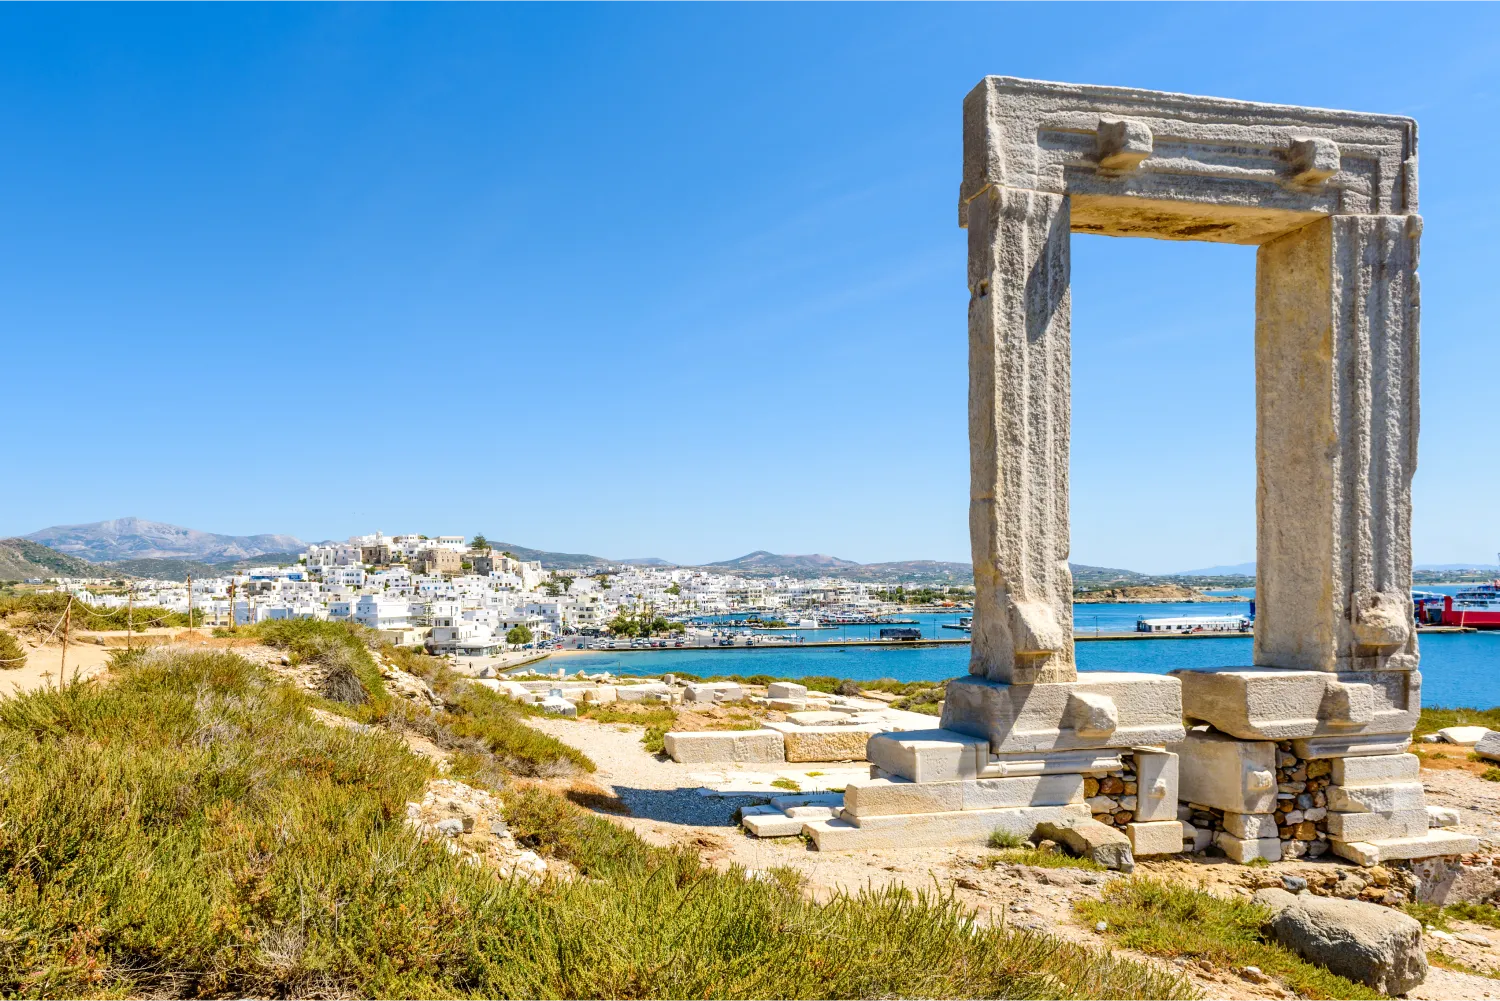 The famous Portara Of Ancient Temple Of Delian Apollo in Naxos